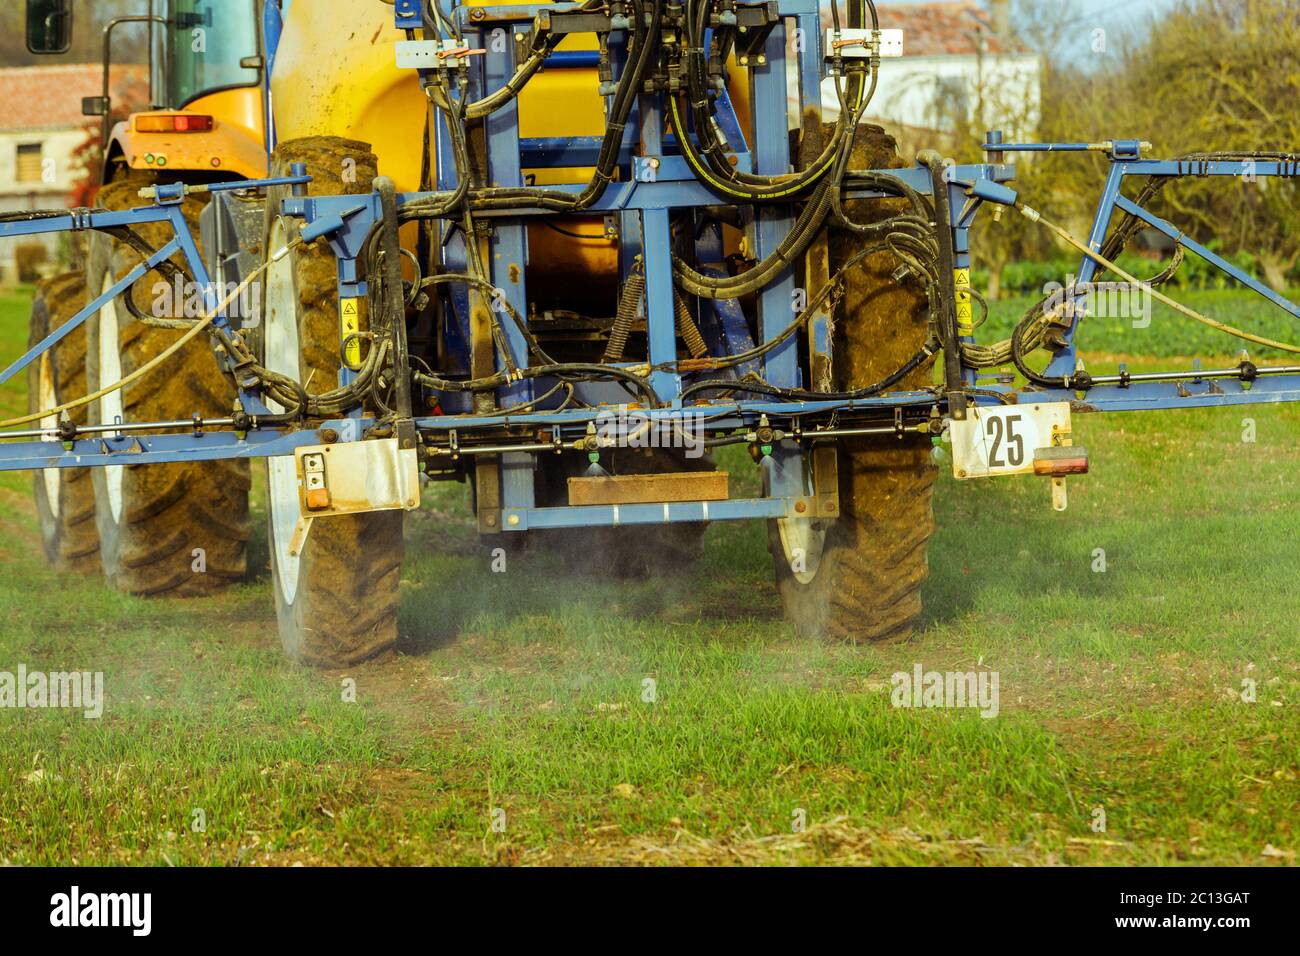 Tractor spraying wheat field with sprayer Stock Photo